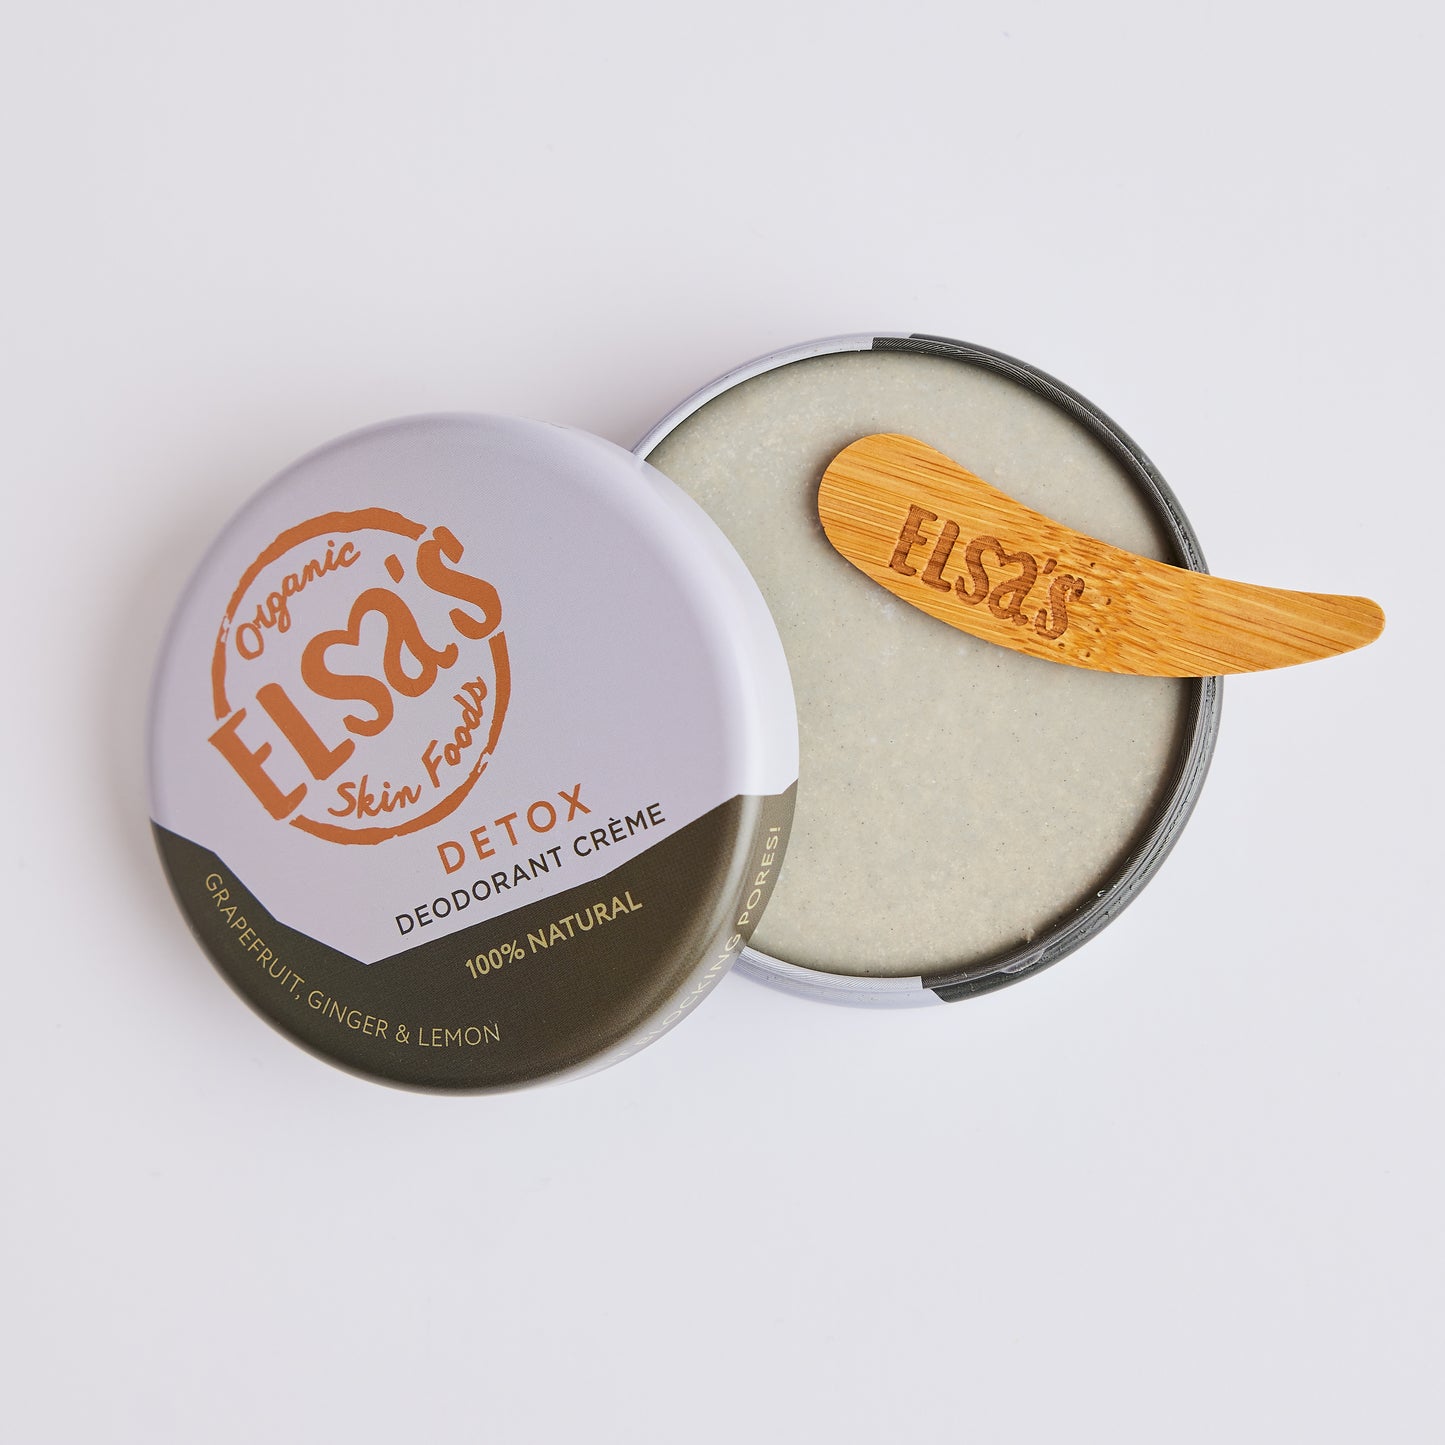 Elsas_Organic_Skinfoods Deodorant Cream Detox Open